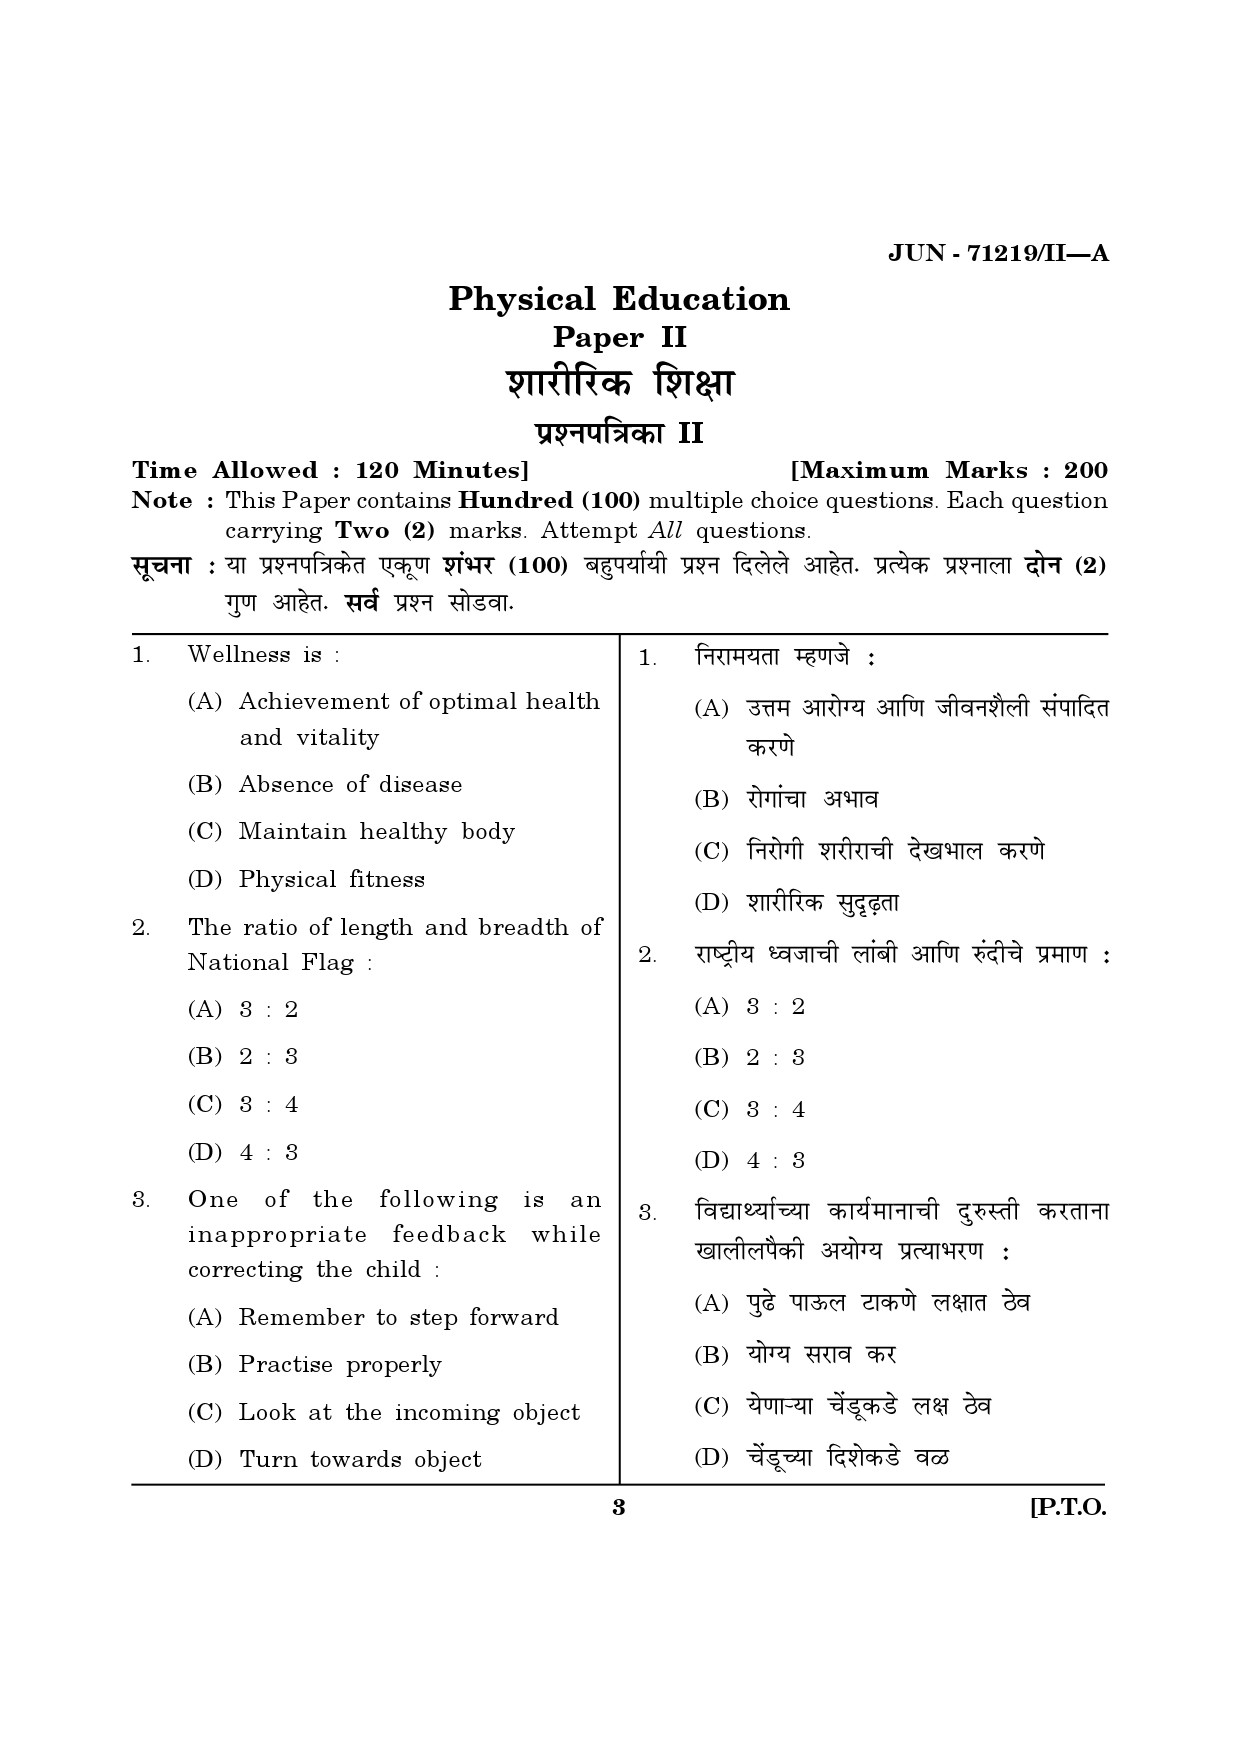 Maharashtra SET Physical Education Question Paper II June 2019 2